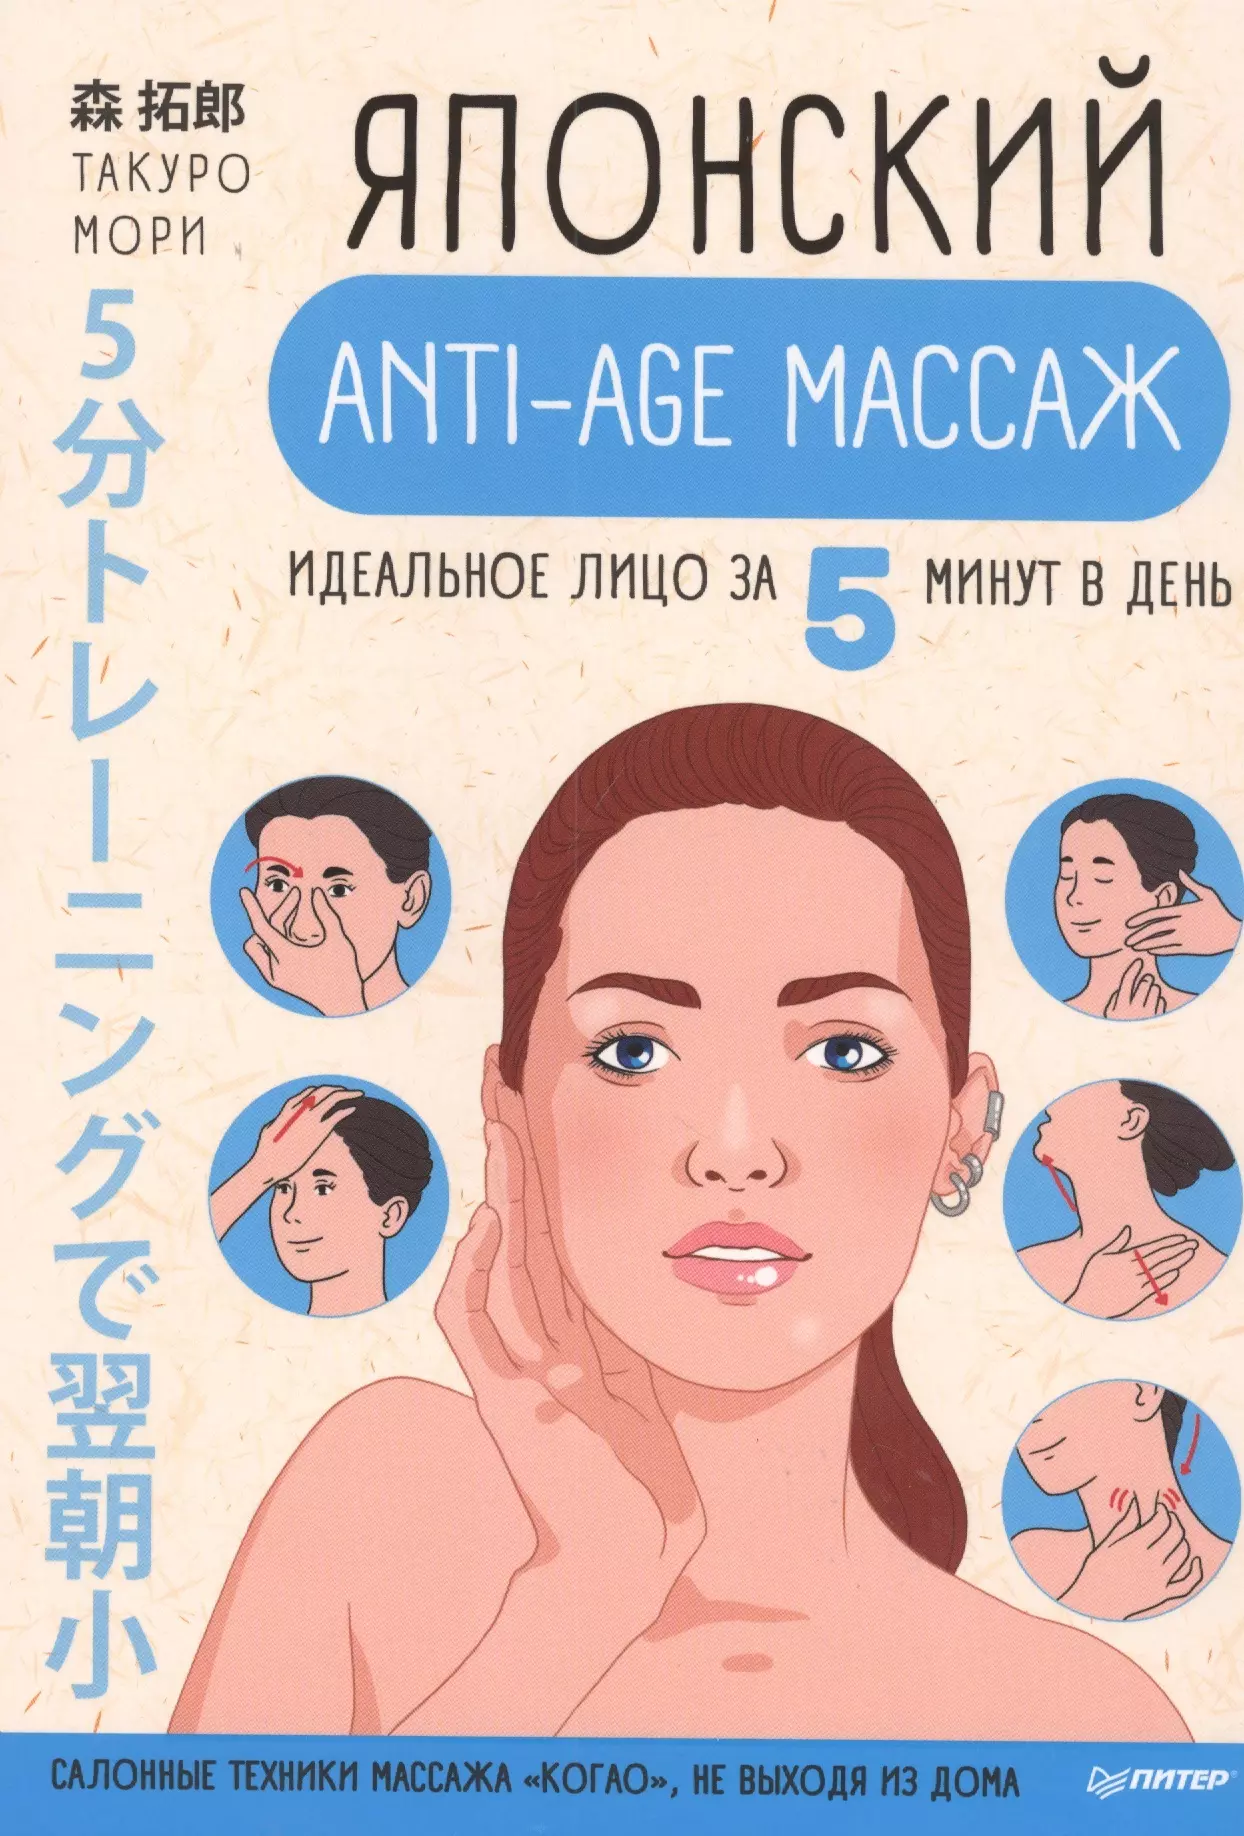 Мори Такуро Японский anti-age массаж: идеальное лицо за 5 минут в день